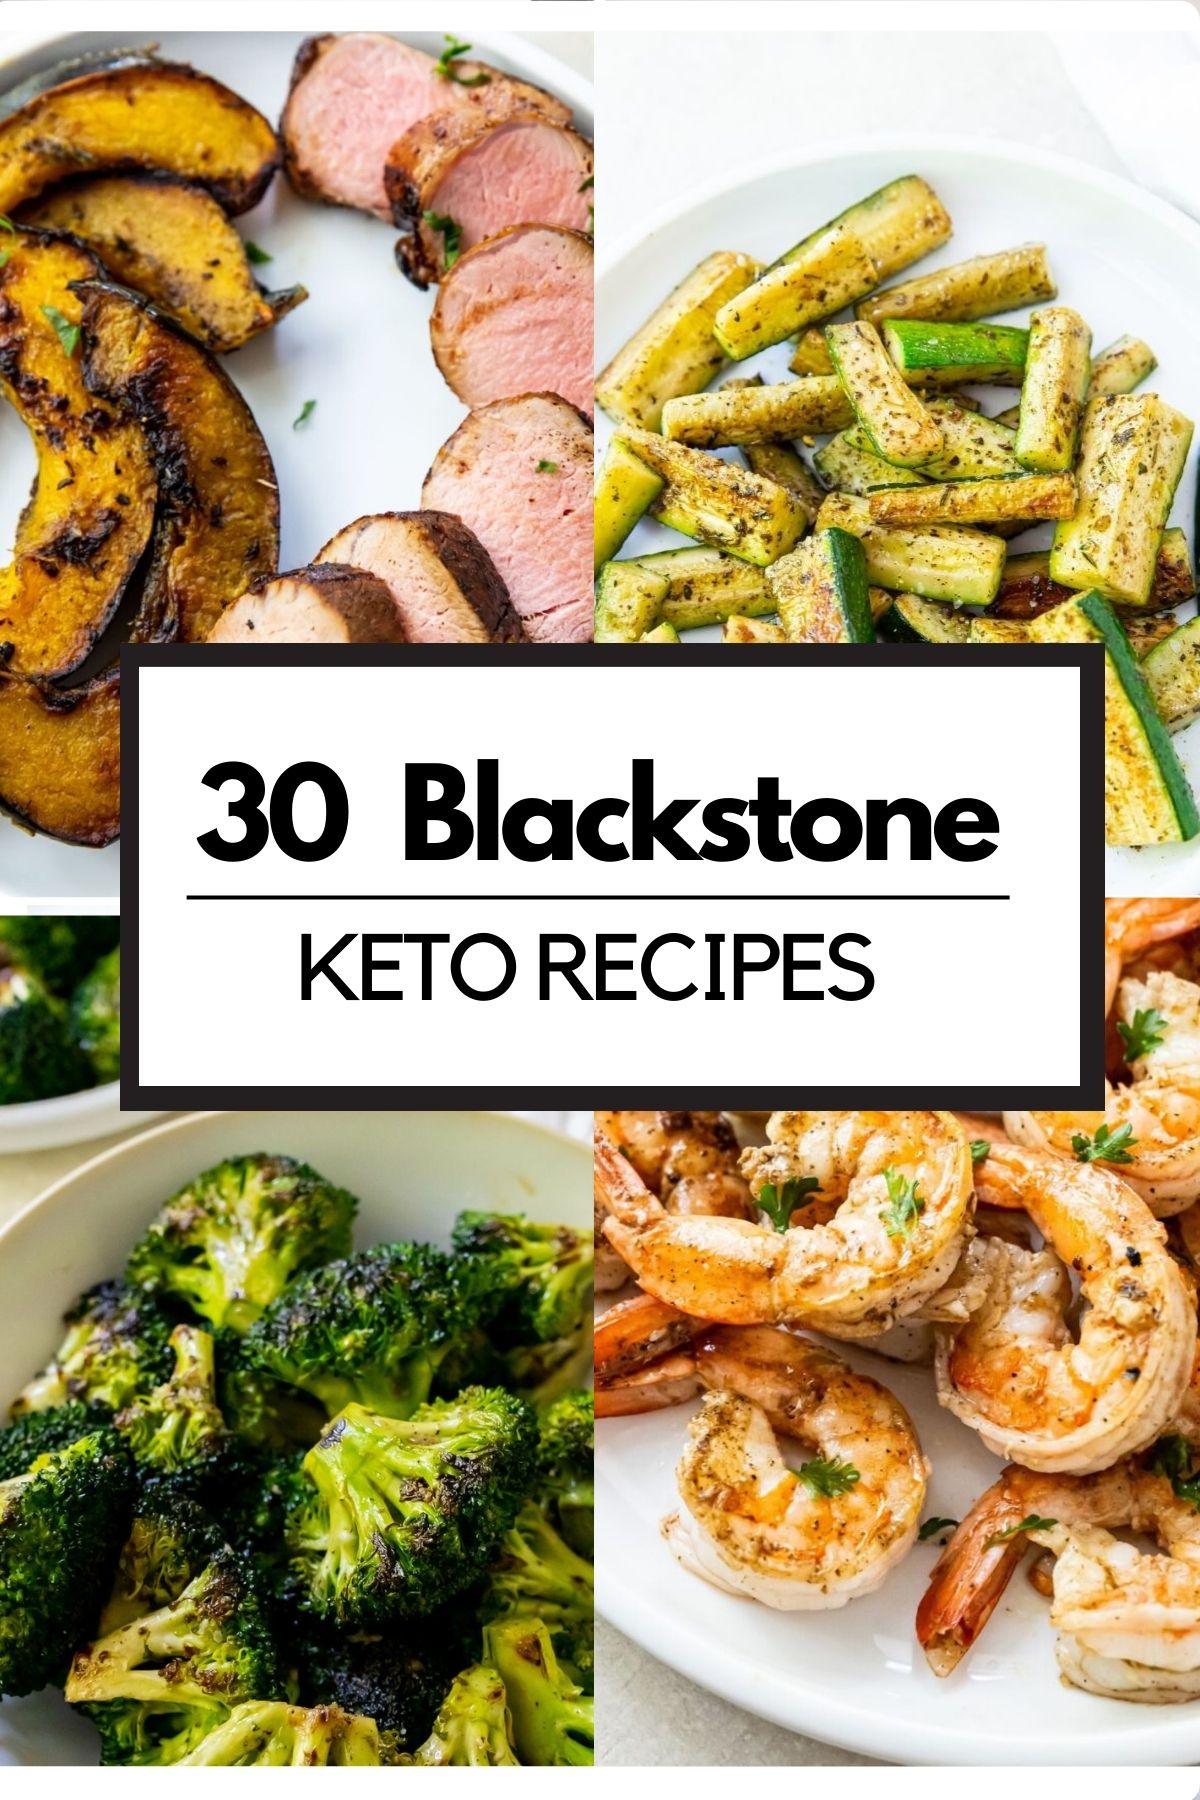 30 blackstone keto recipes.